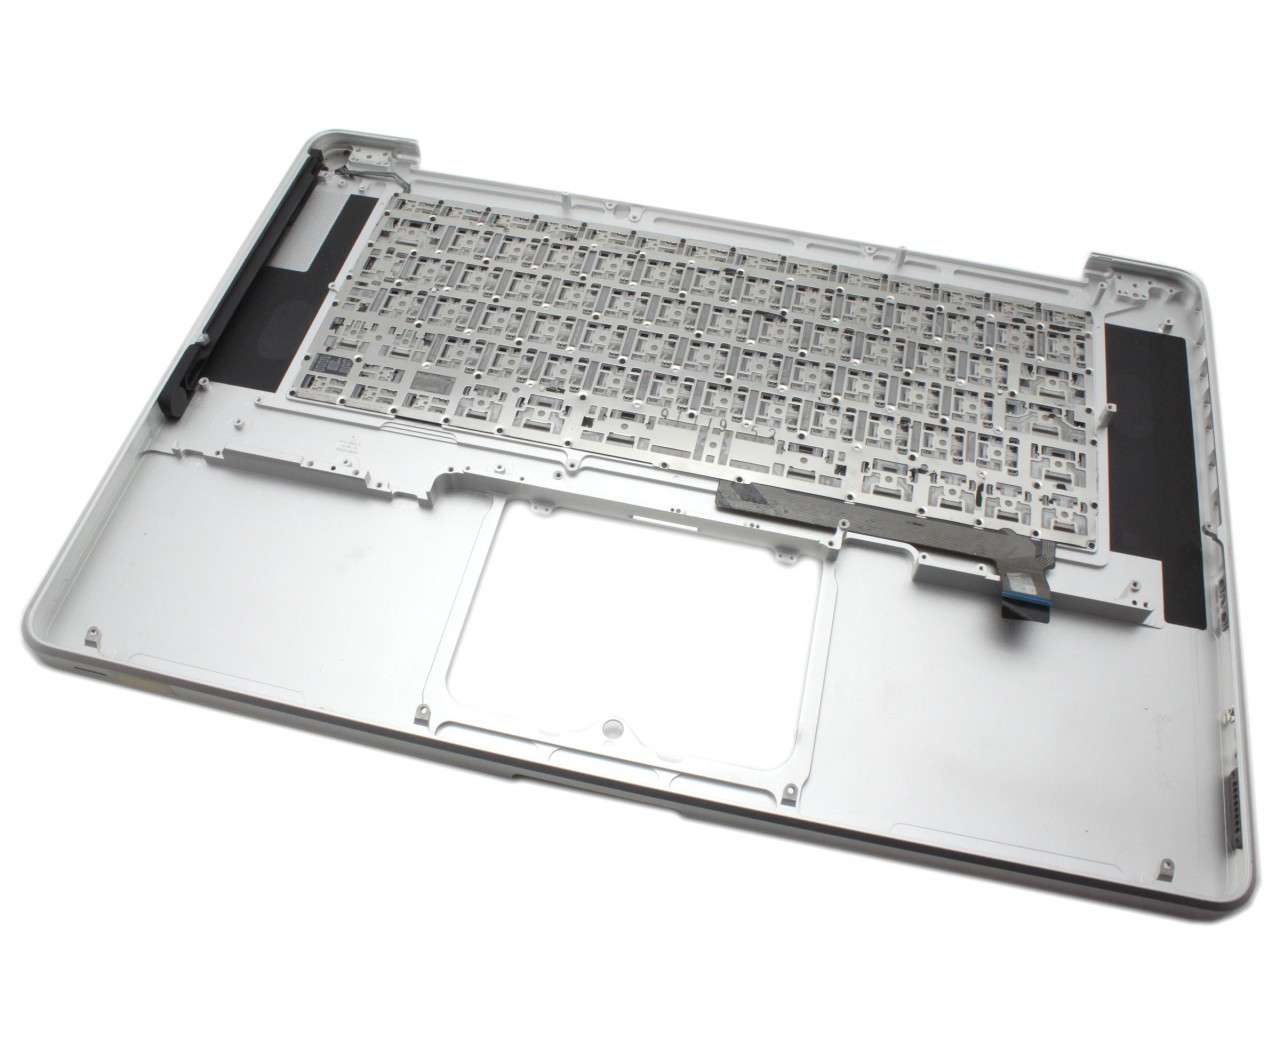 Tastatura Apple MacBook Pro 15 MC026 Neagra cu Palmrest Argintiu Refurbished Apple Apple